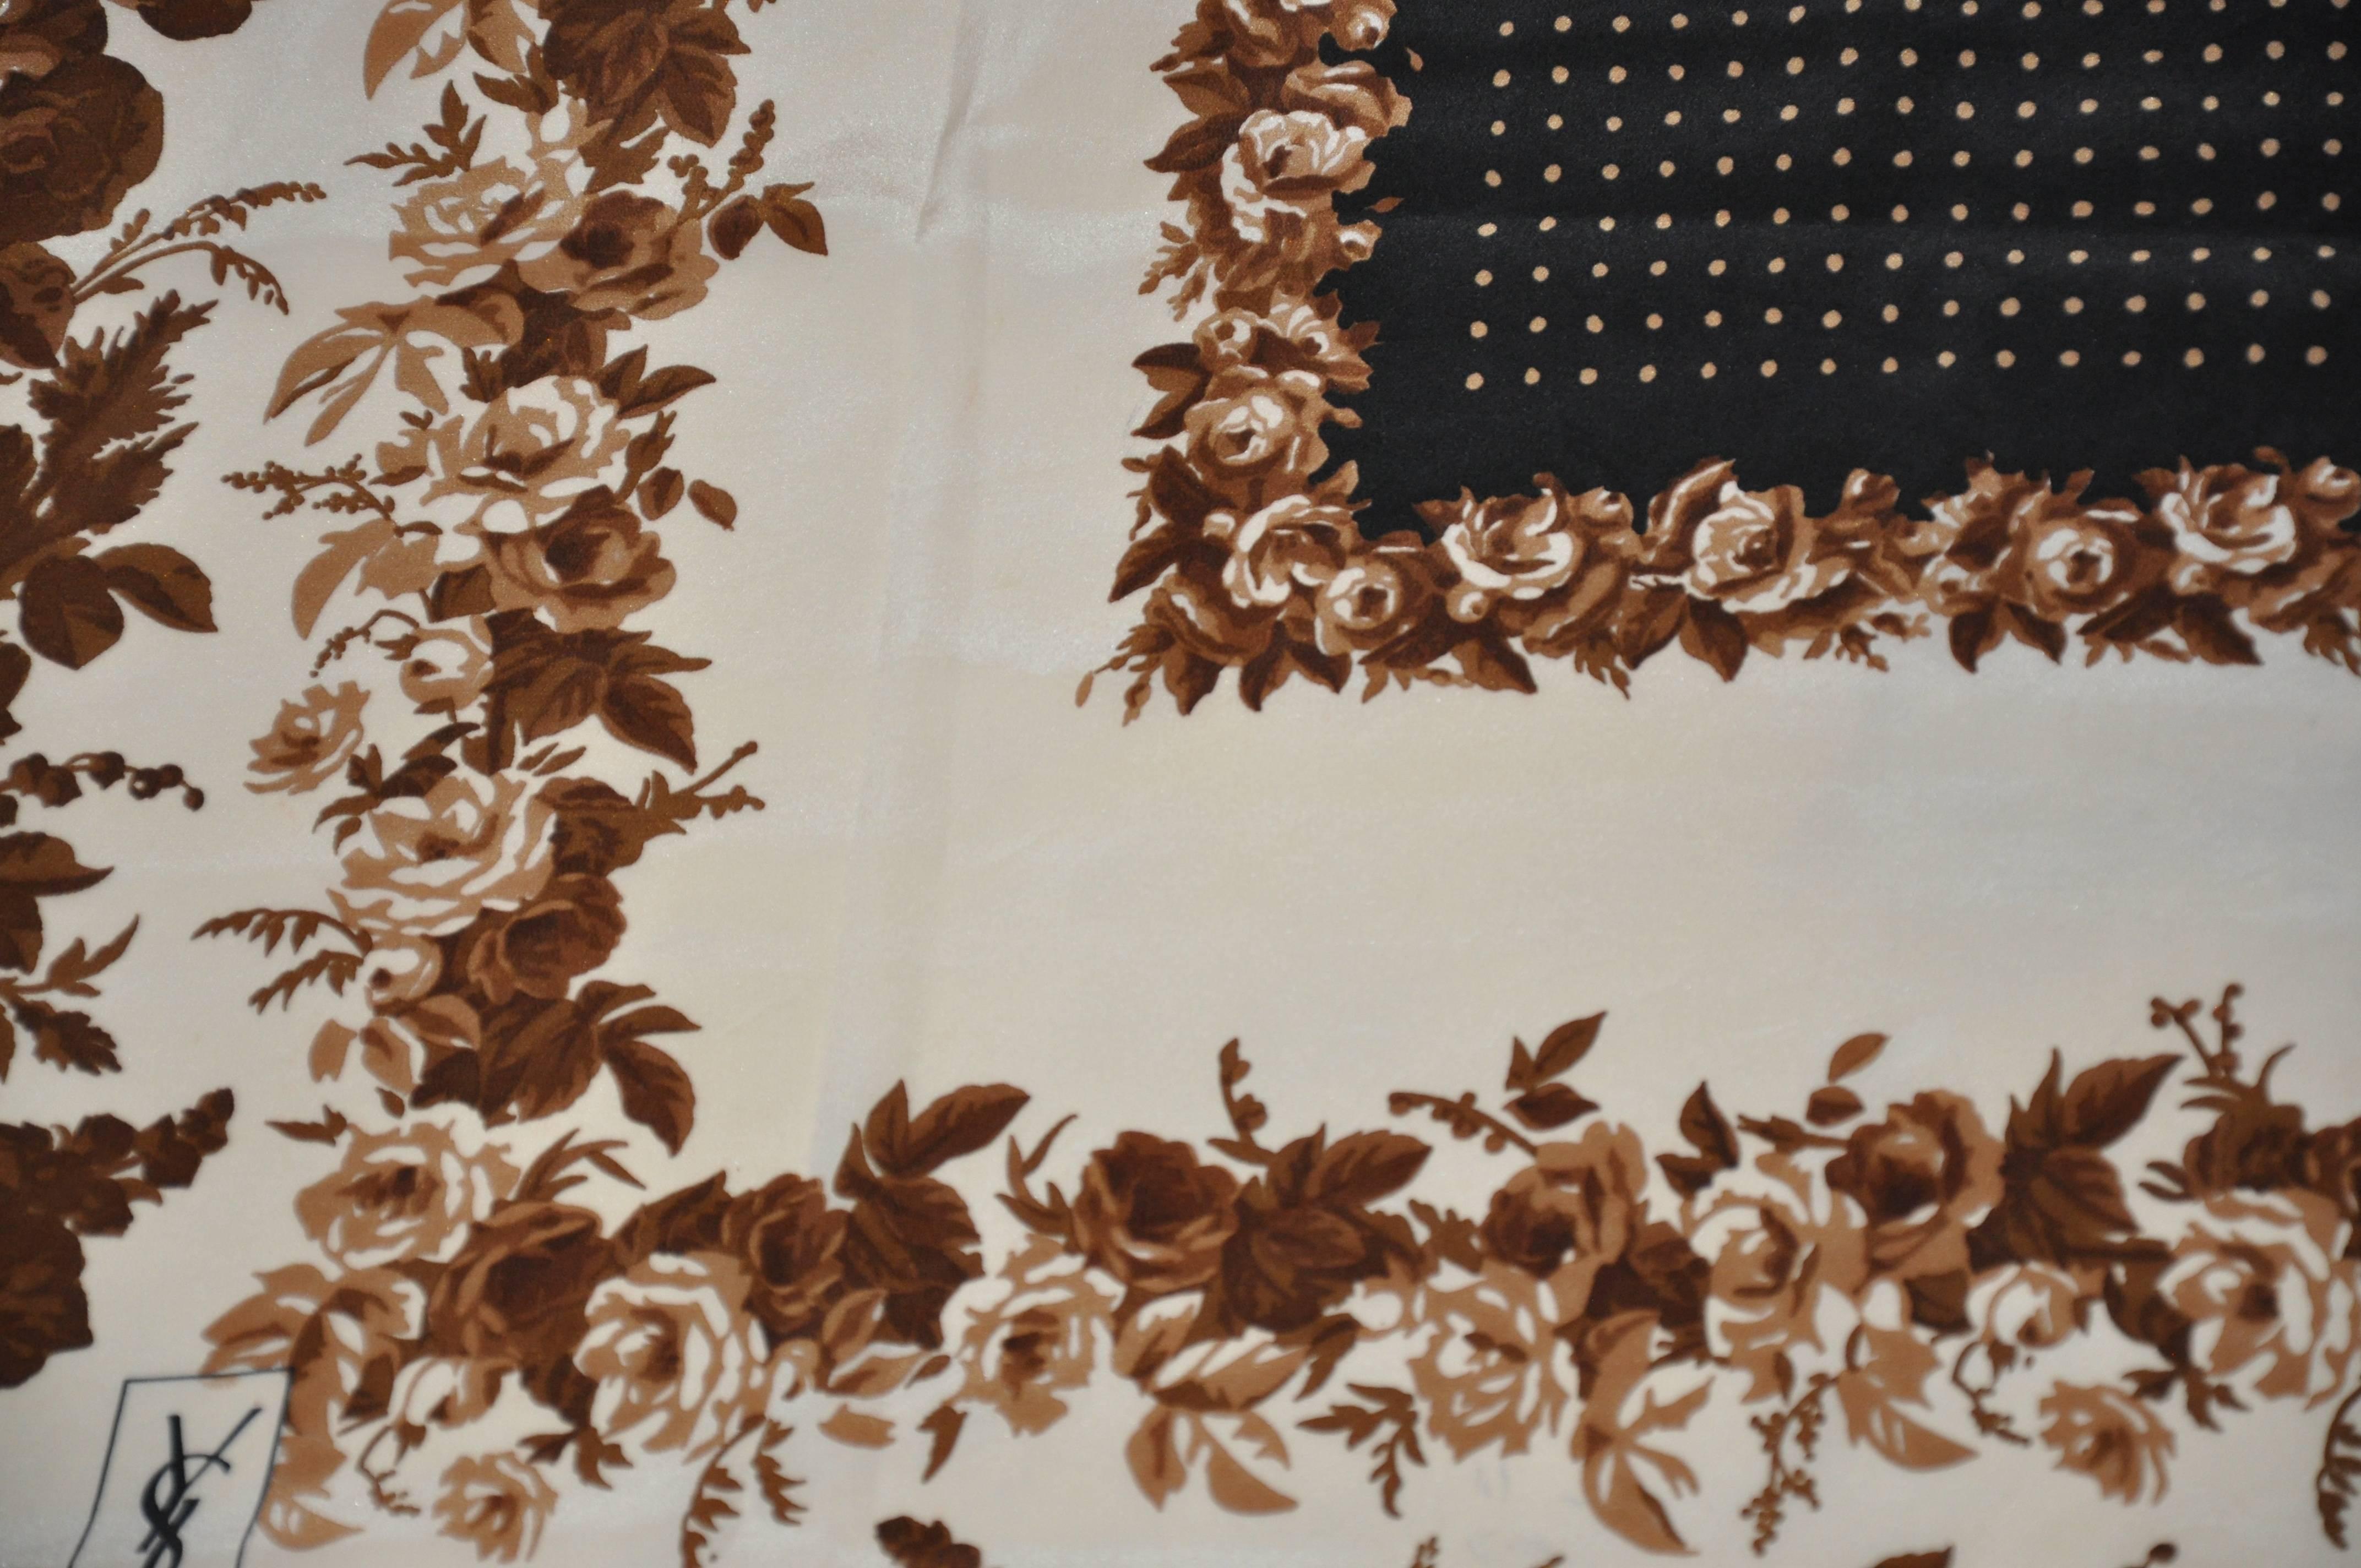 Yves Saint Laurent Huge Polka Dot Center with Brown Floral Border Silk Scarf 2